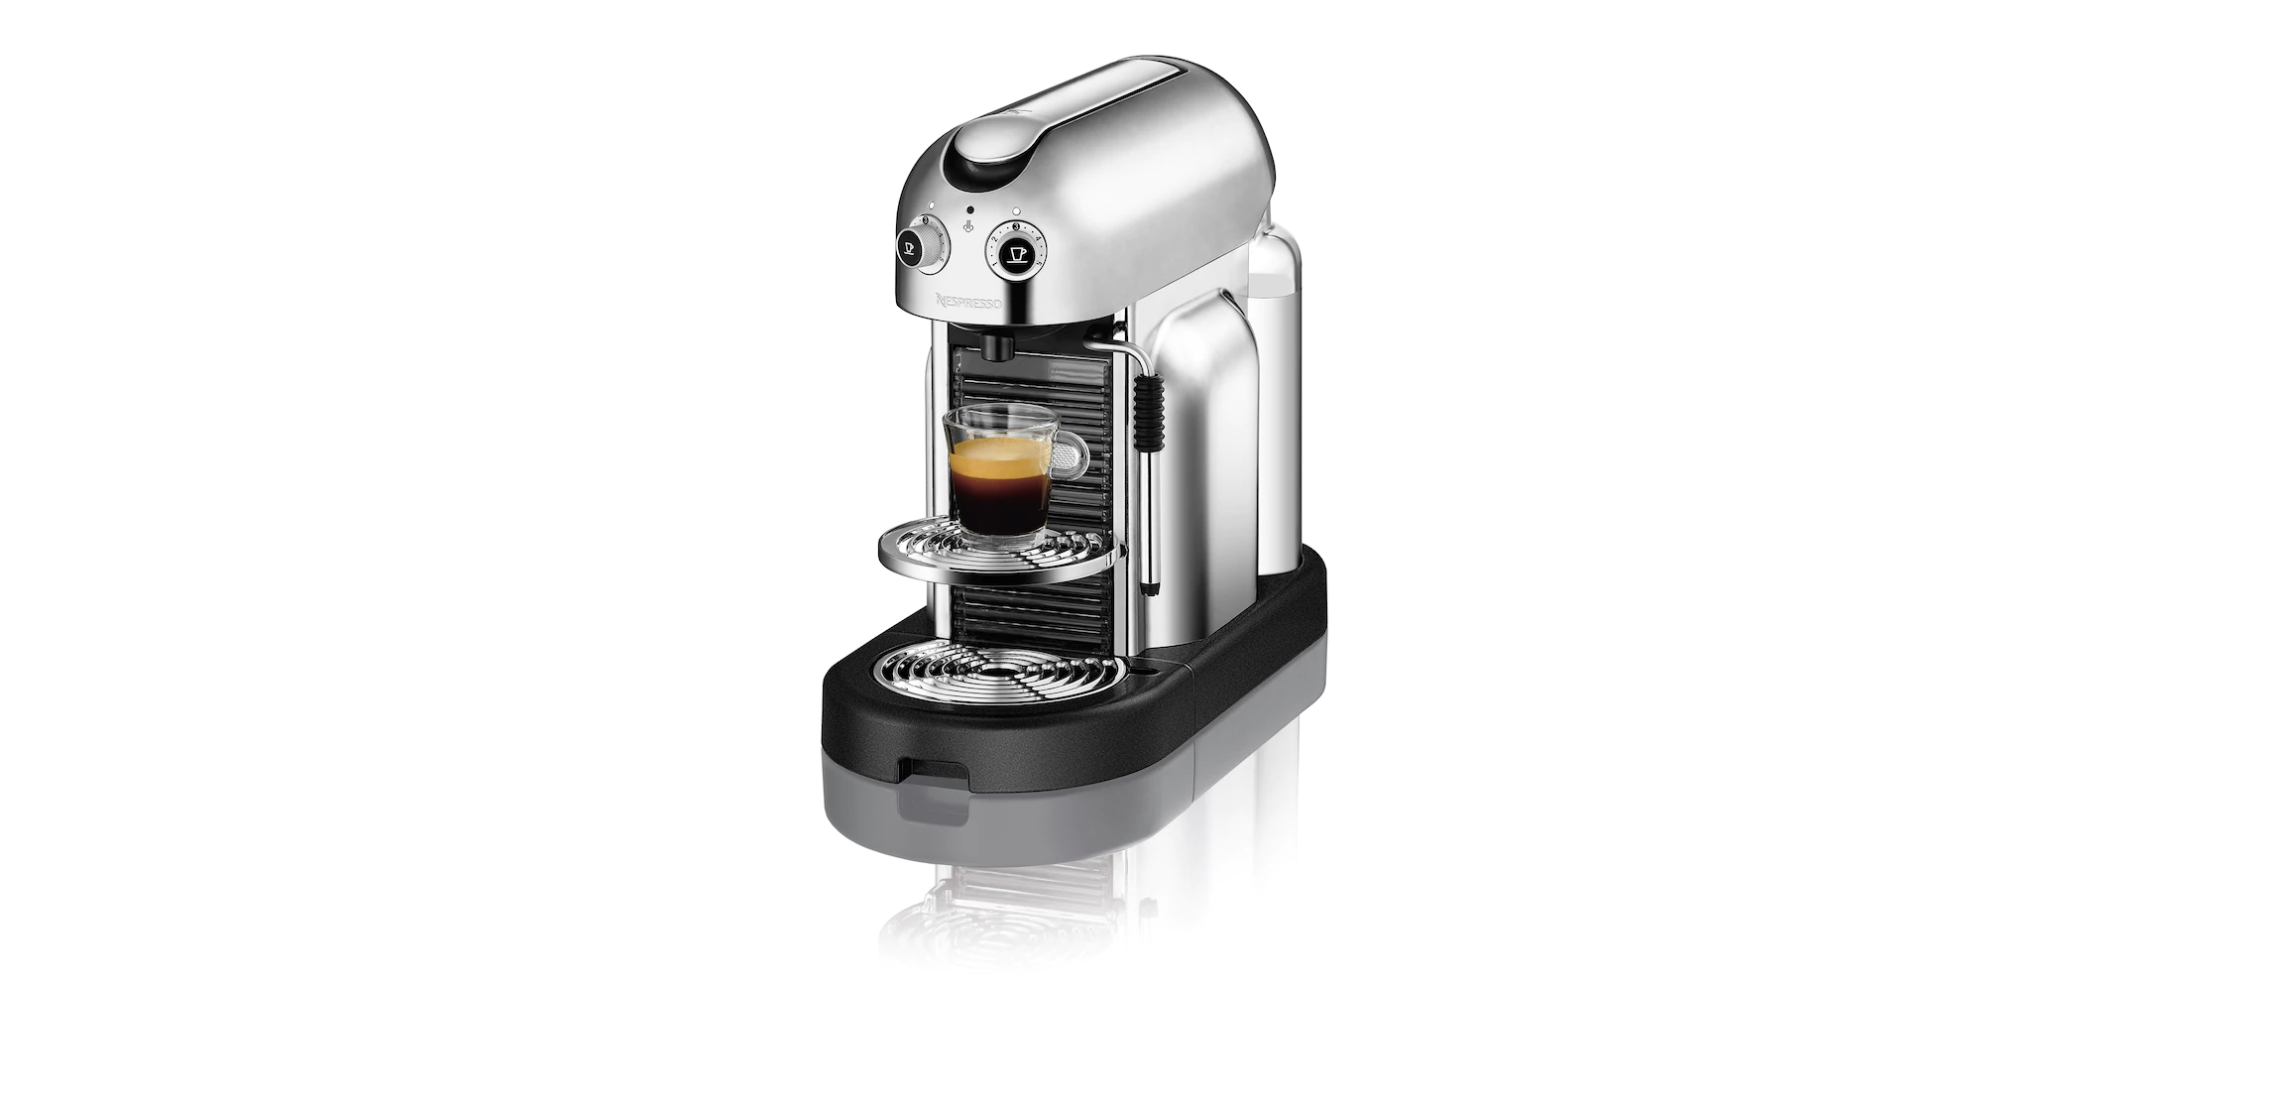 The Maestria machine range brings to homes the art of coffee making